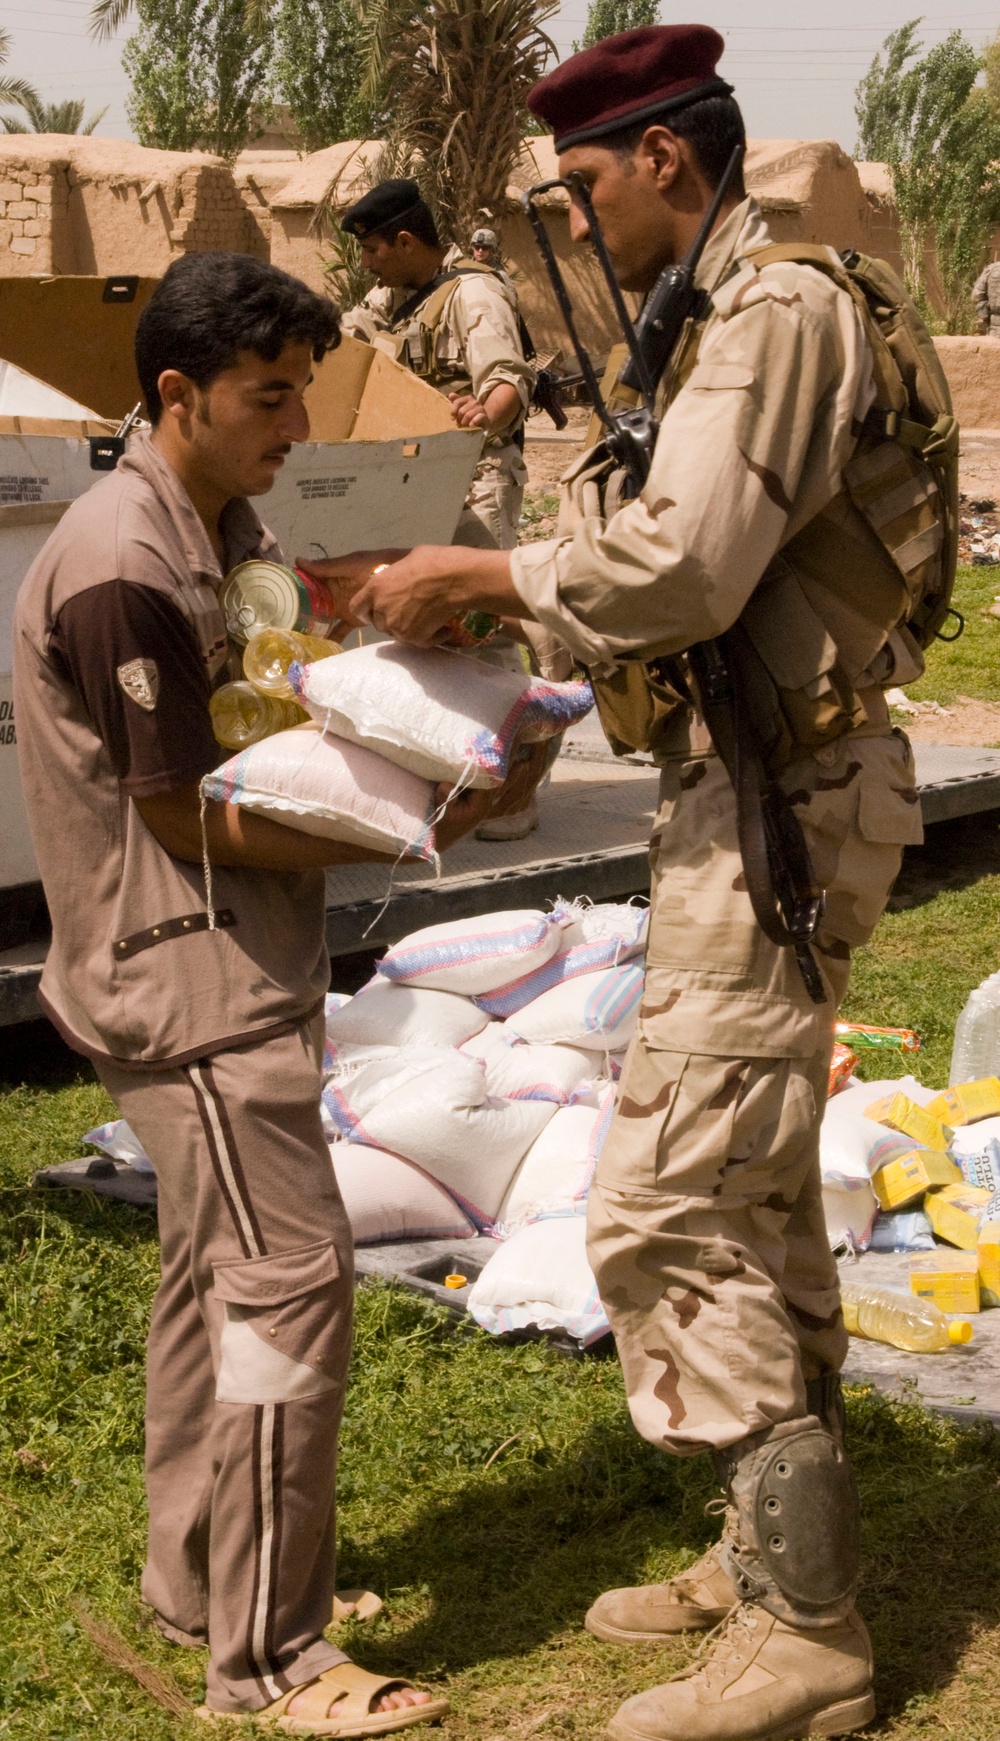 IA, Texas Soldiers Provide Humanitarian Aid to Farmers